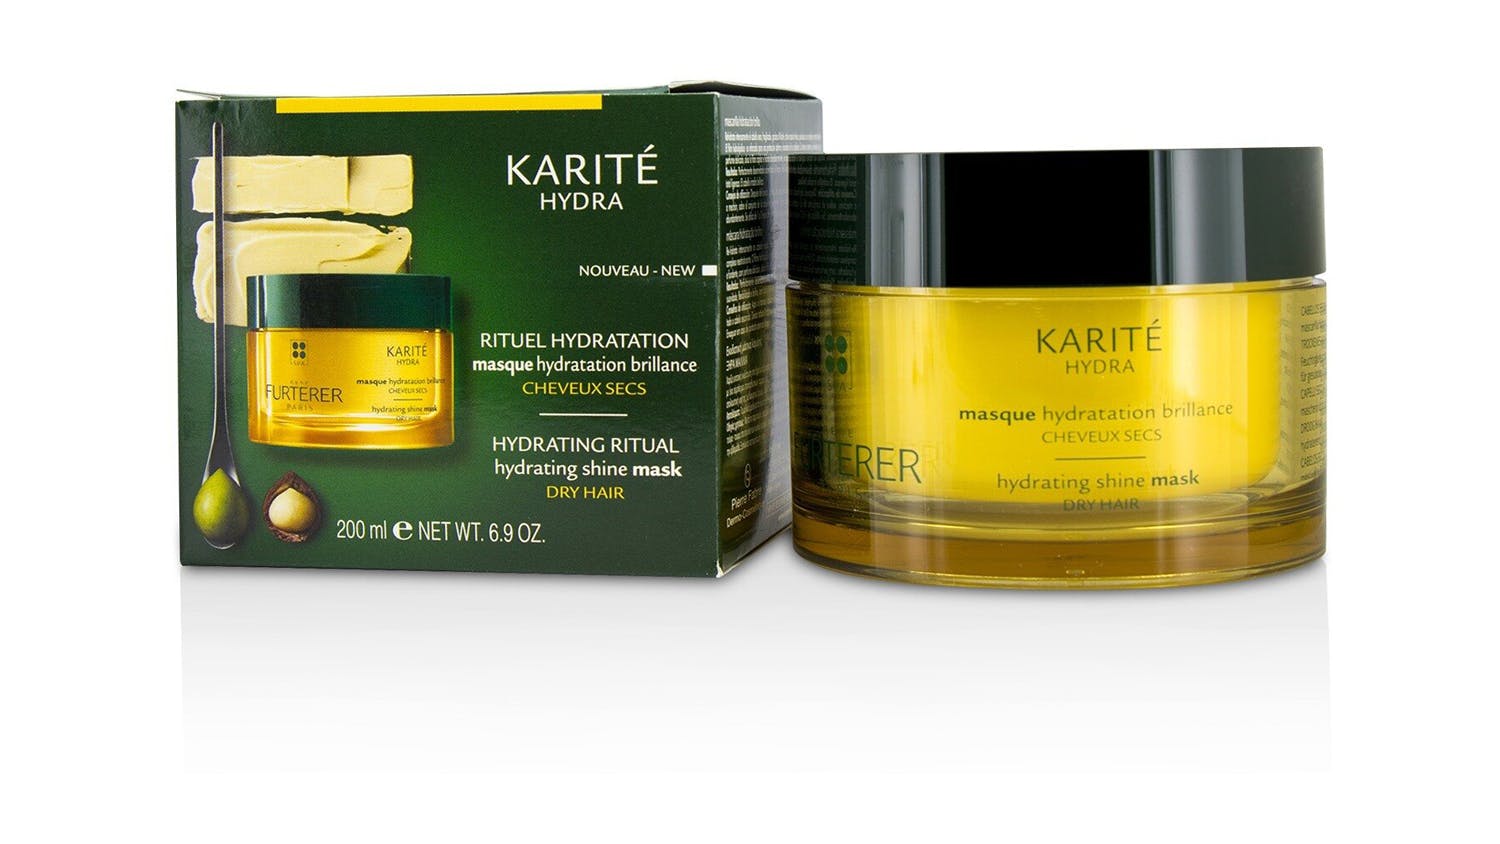 Karite Hydra Hydrating Ritual Hydrating Shine Mask (Dry Hair) - 200ml/6.9oz